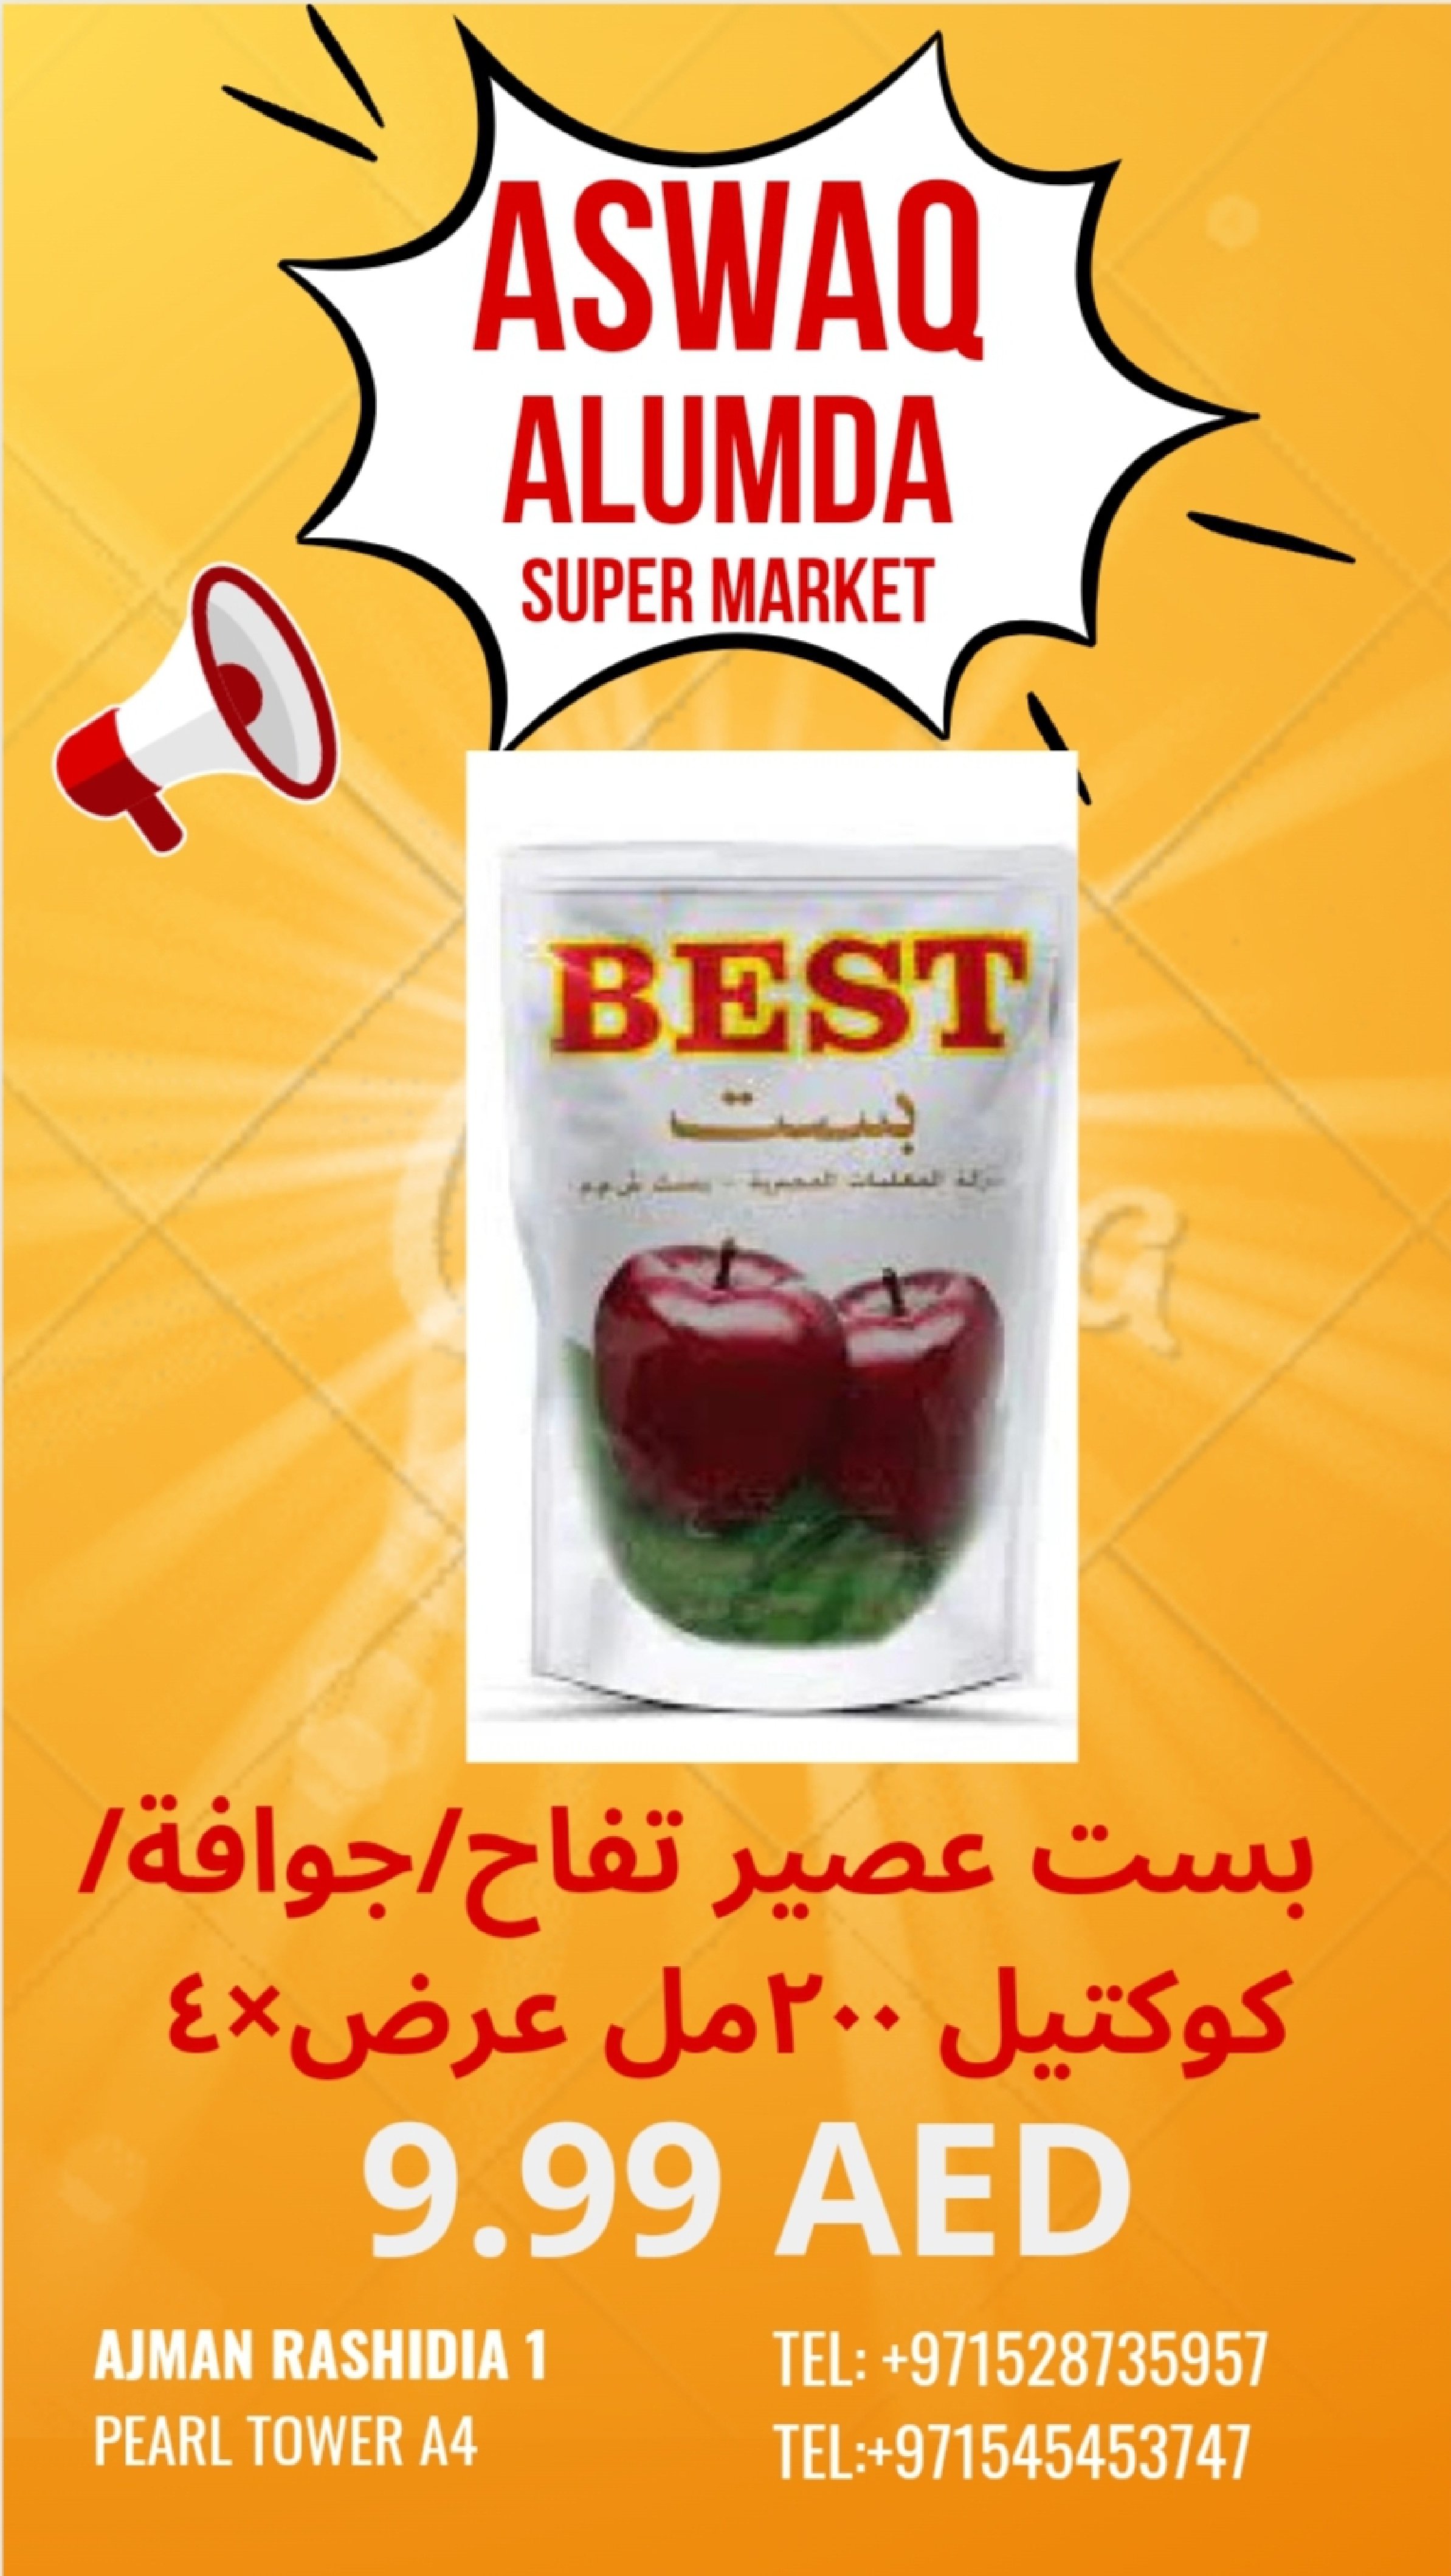 Page 67 at Weekly promotions at Elomda Market Ajman